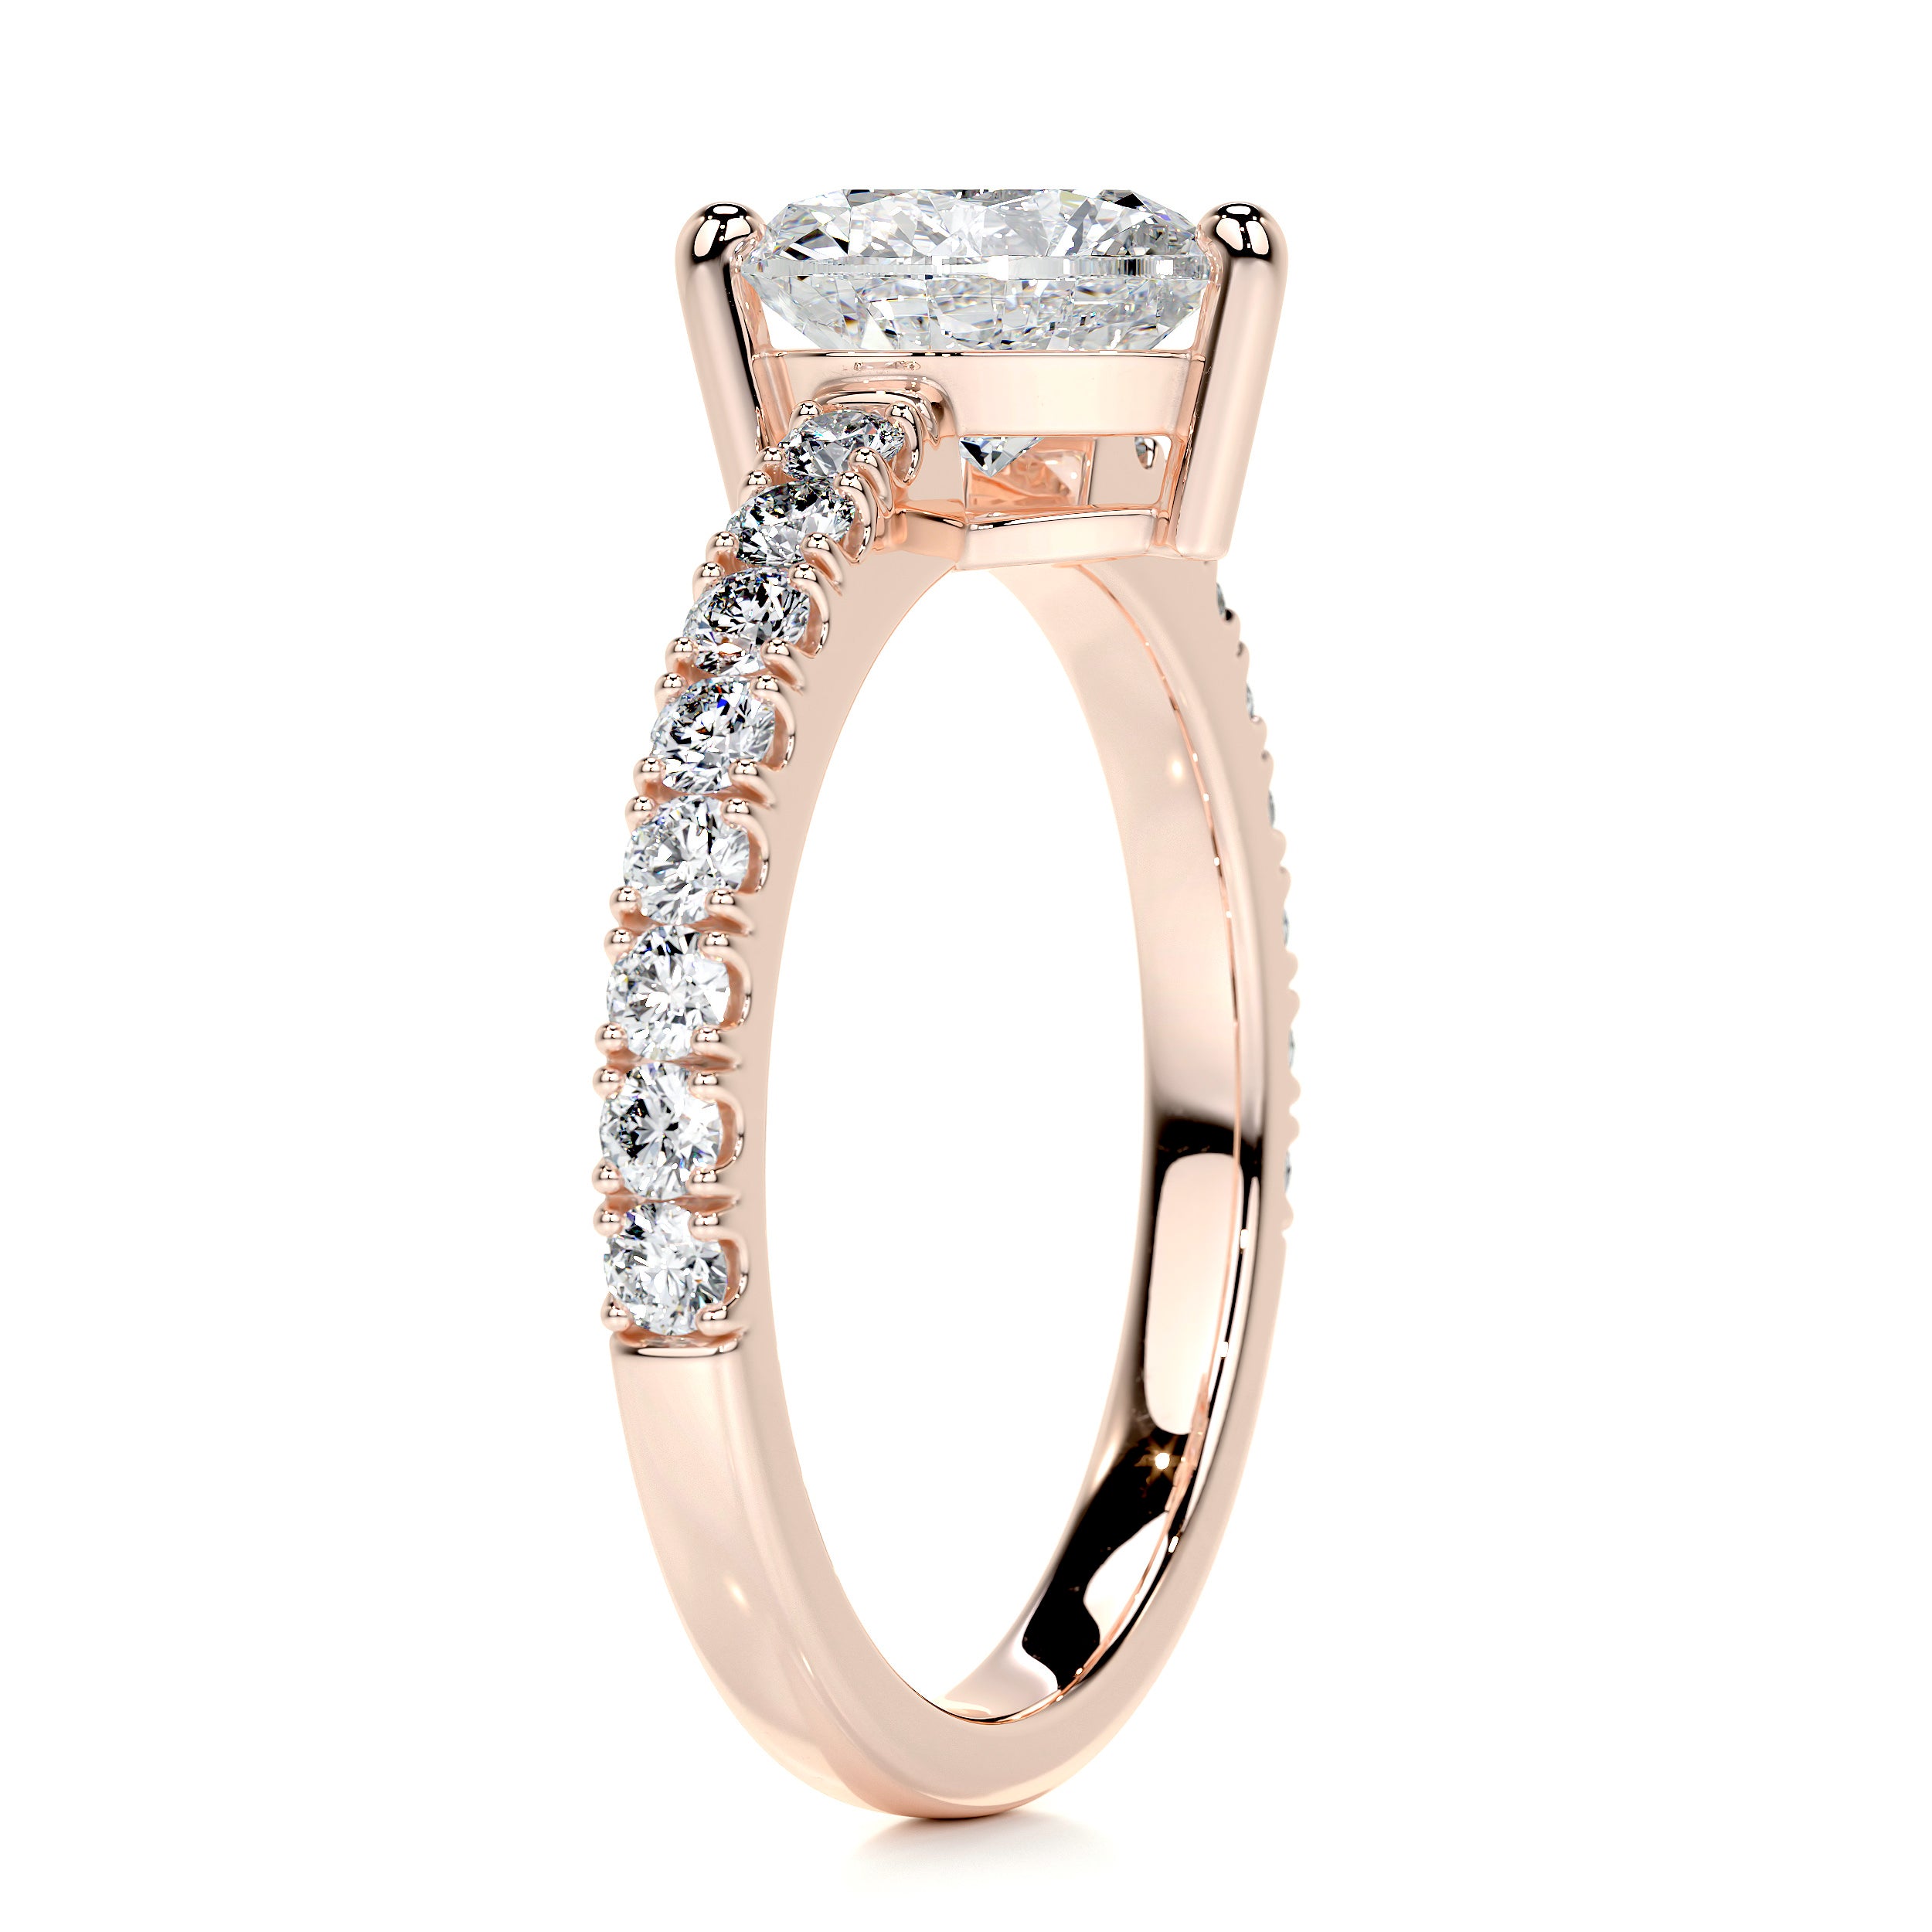 Audrey Diamond Engagement Ring -14K Rose Gold